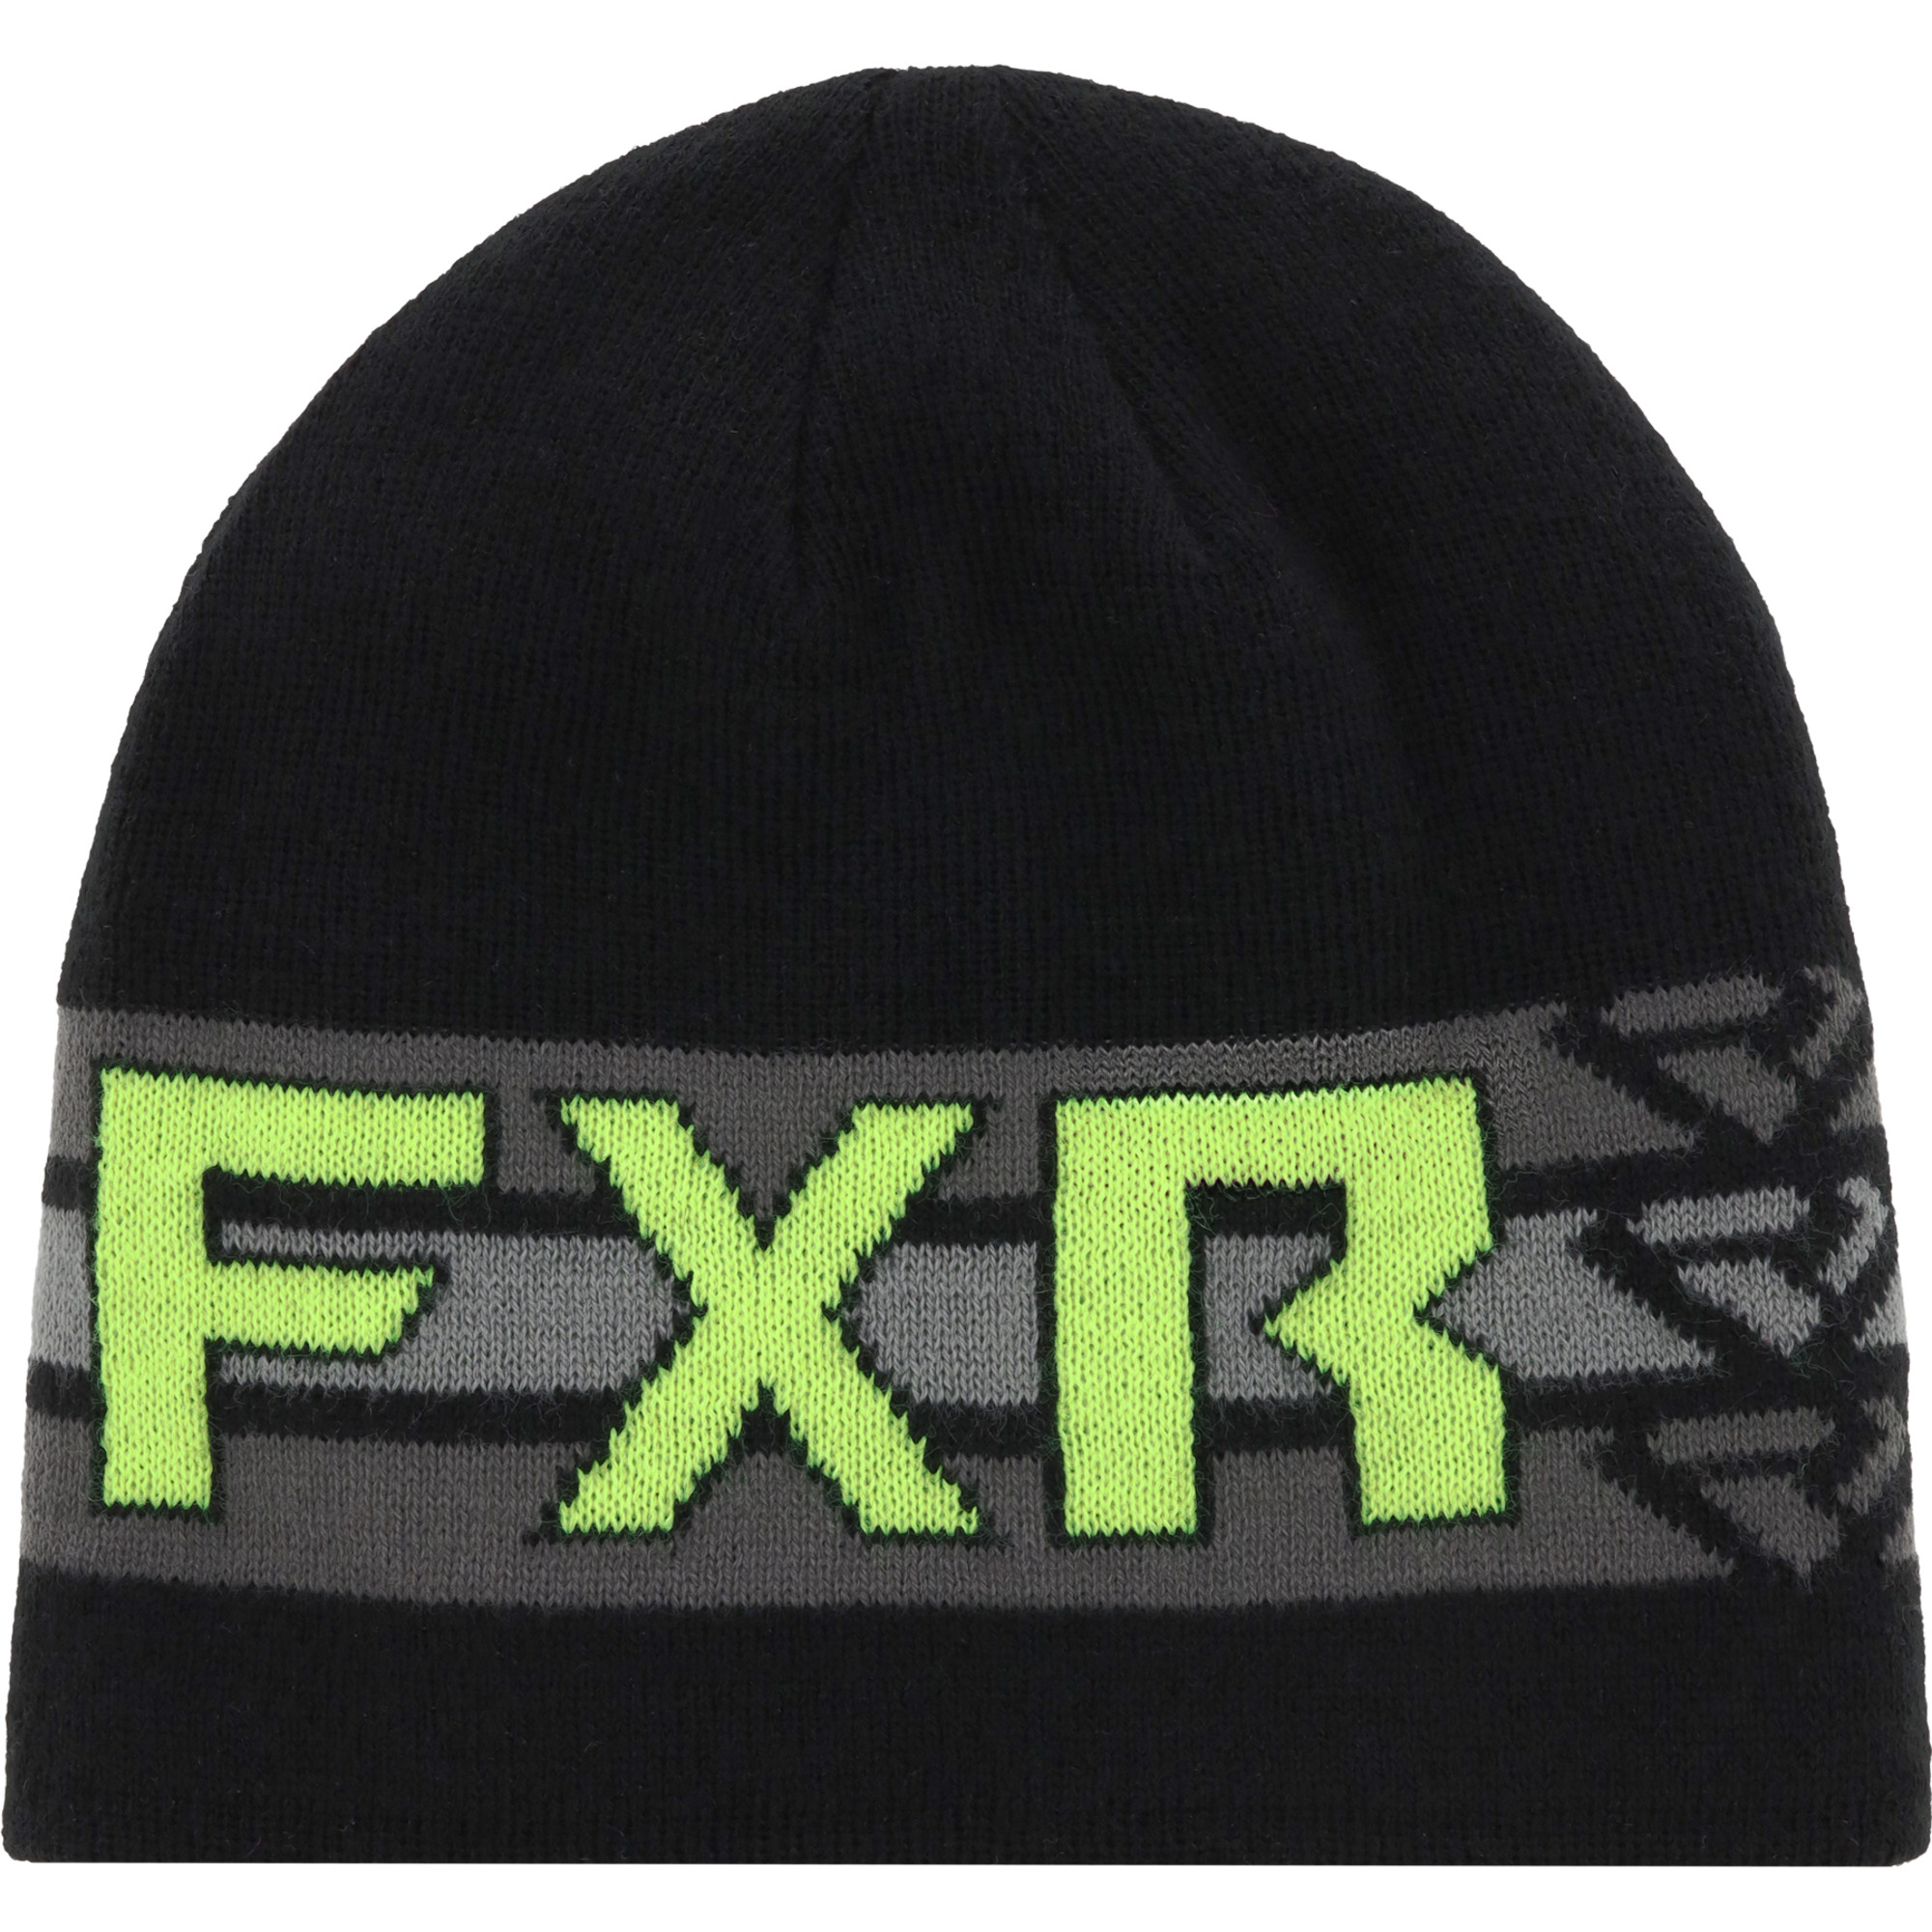 fxr racing beanie headwear for kids team